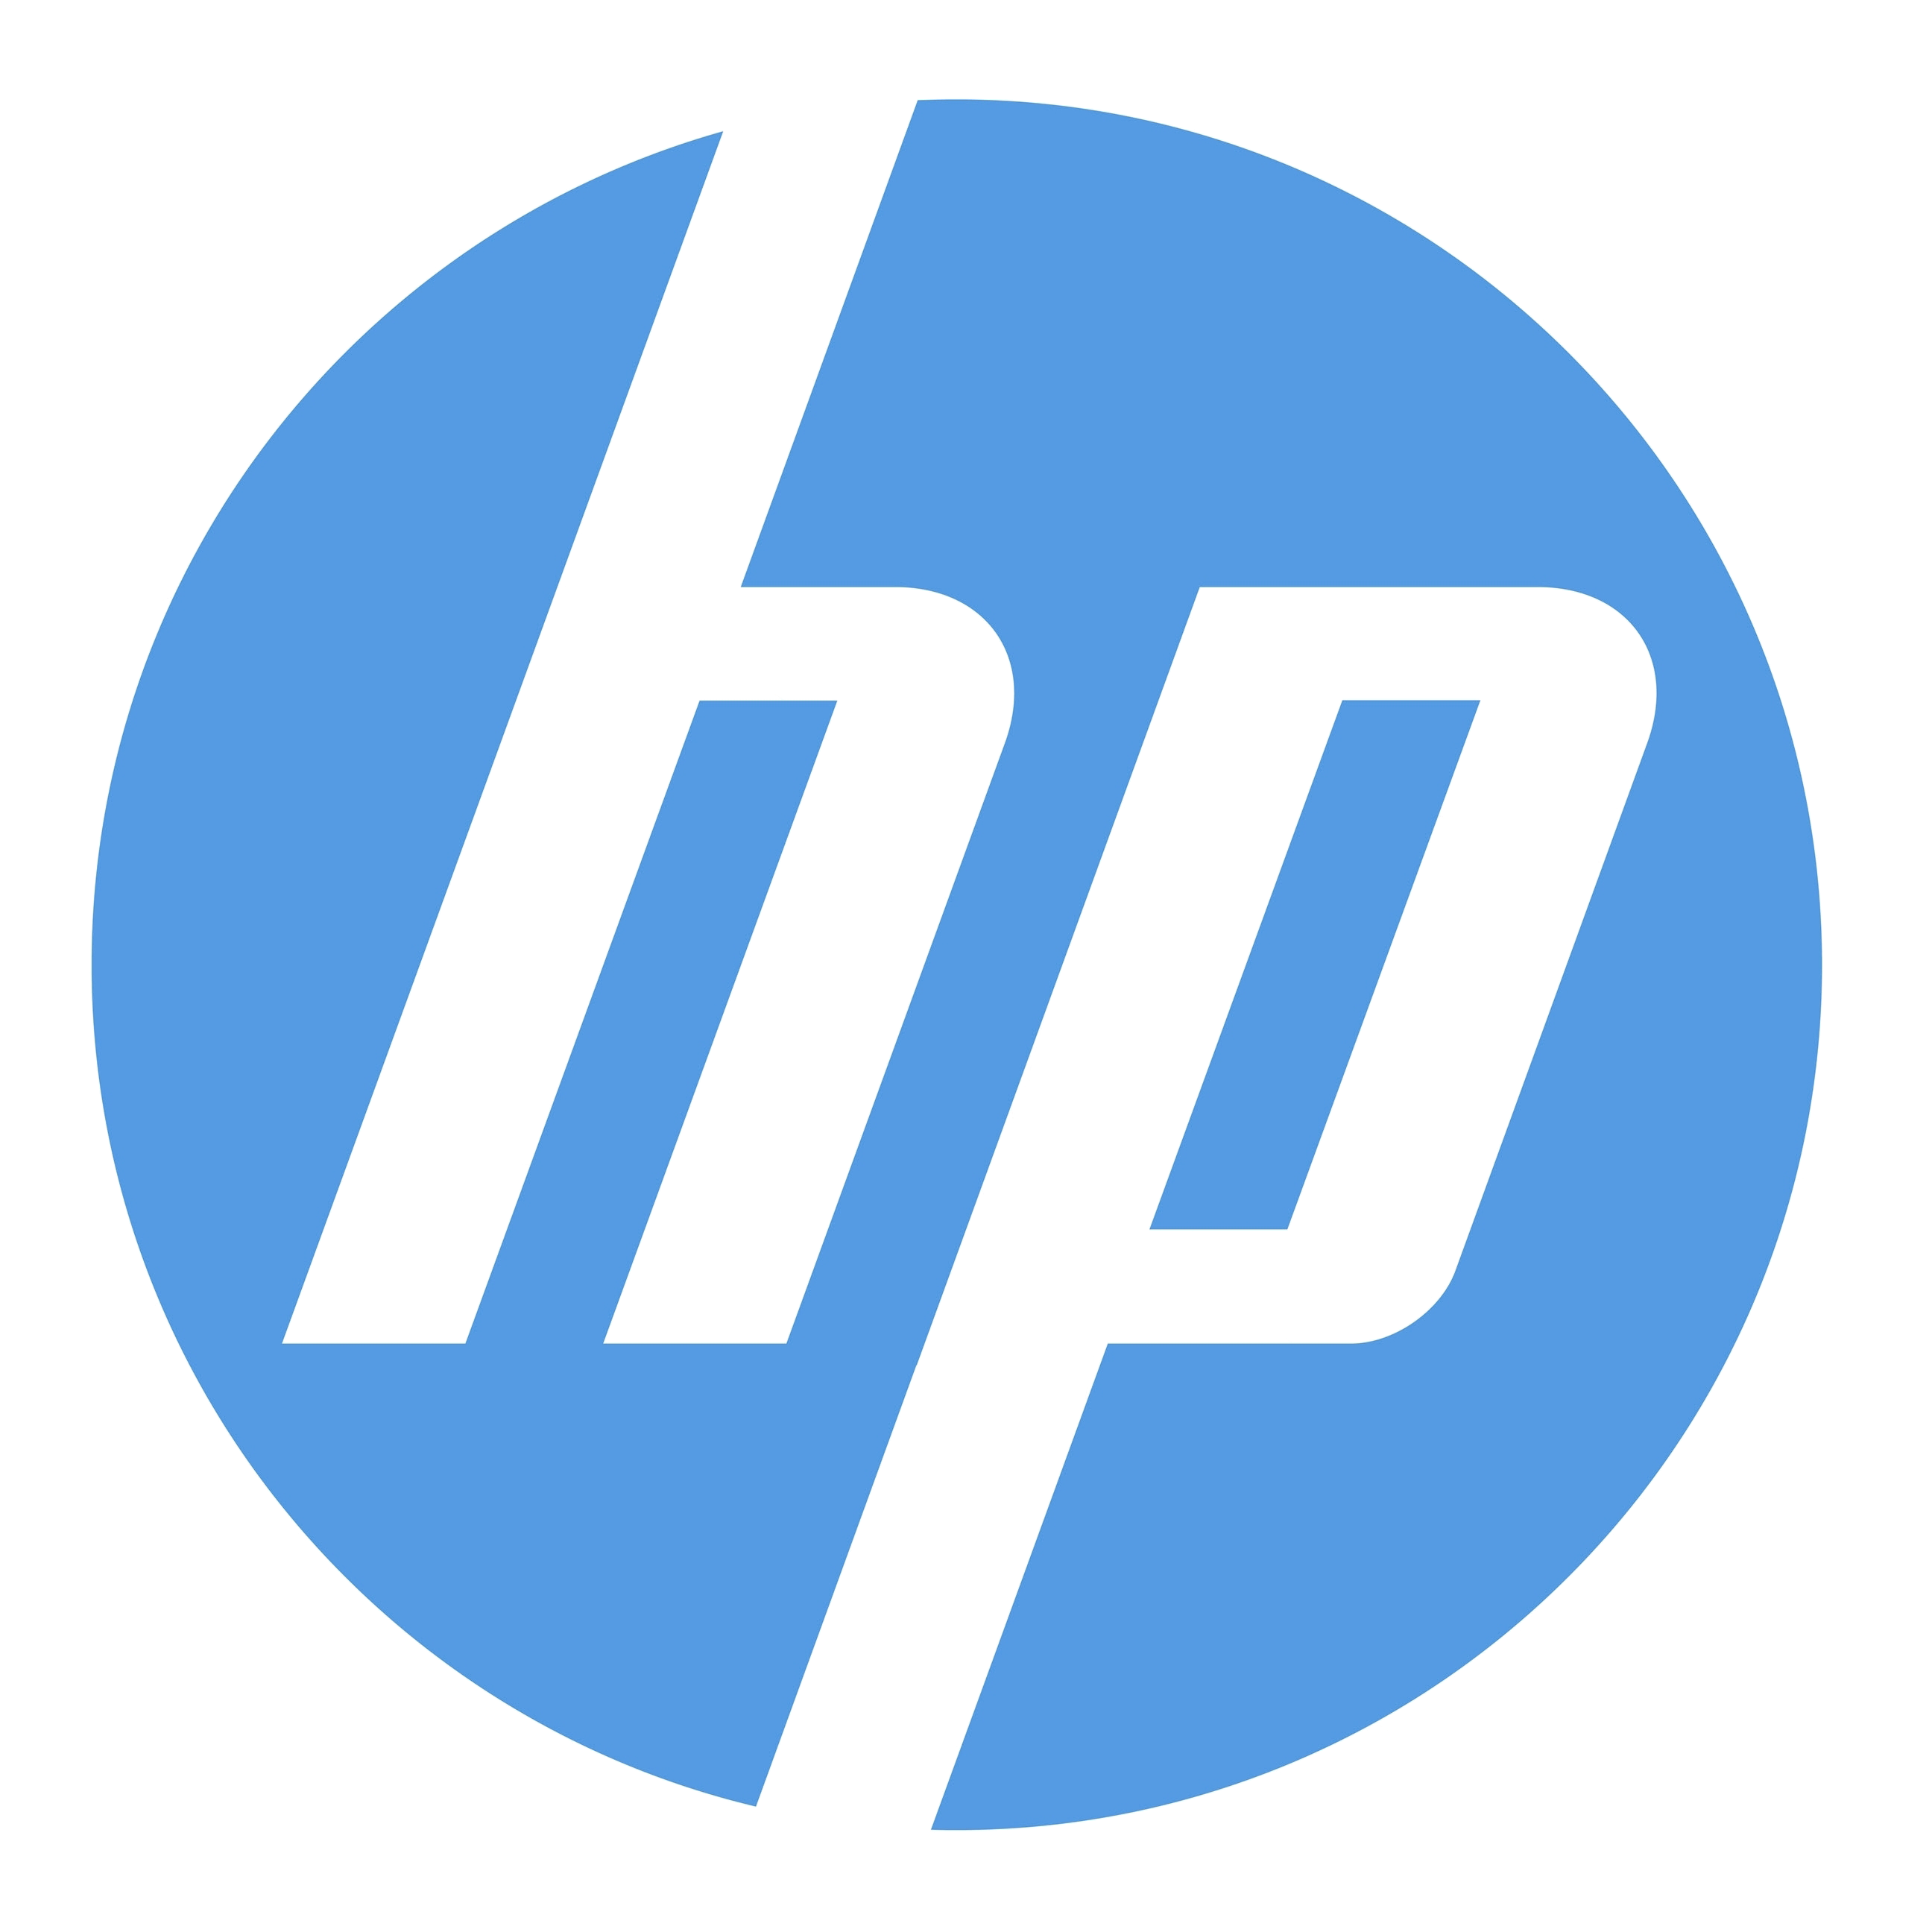 HP Logo PNG Image - PurePNG | Free transparent CC0 PNG Image Library